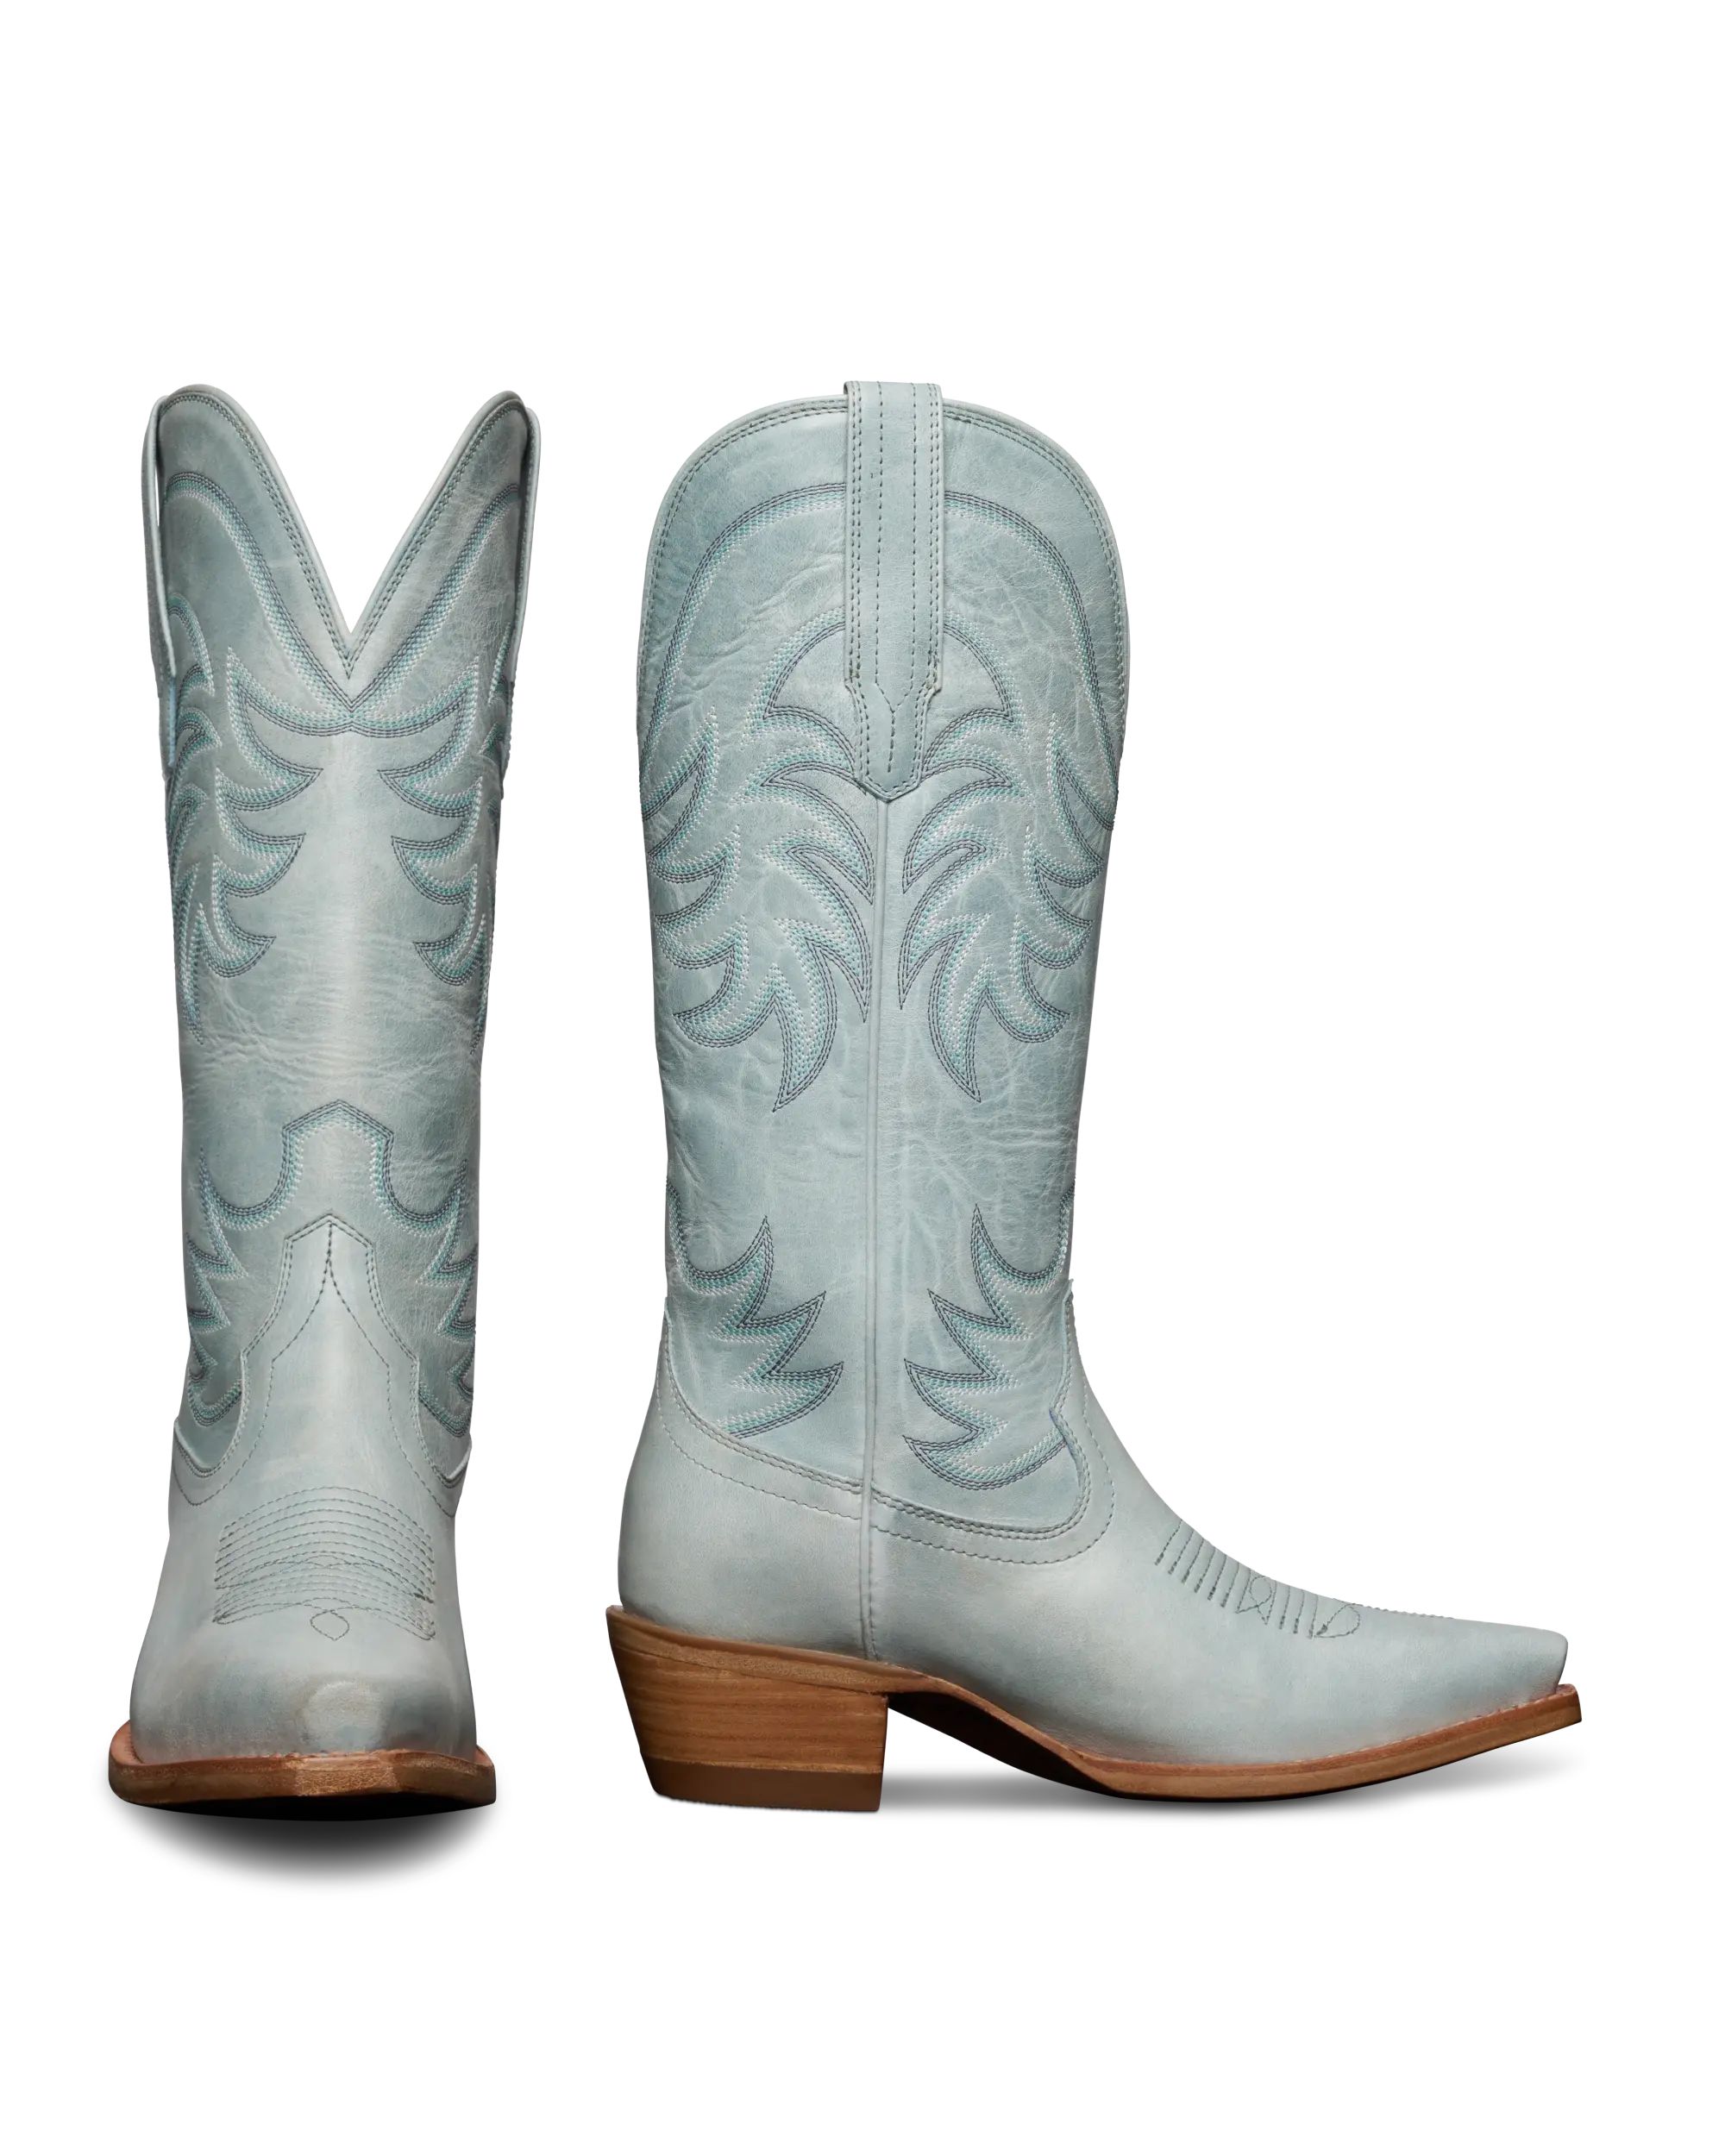 Women's Tall Cowgirl Boots |  The Annie - Slate Blue | Tecovas | Tecovas